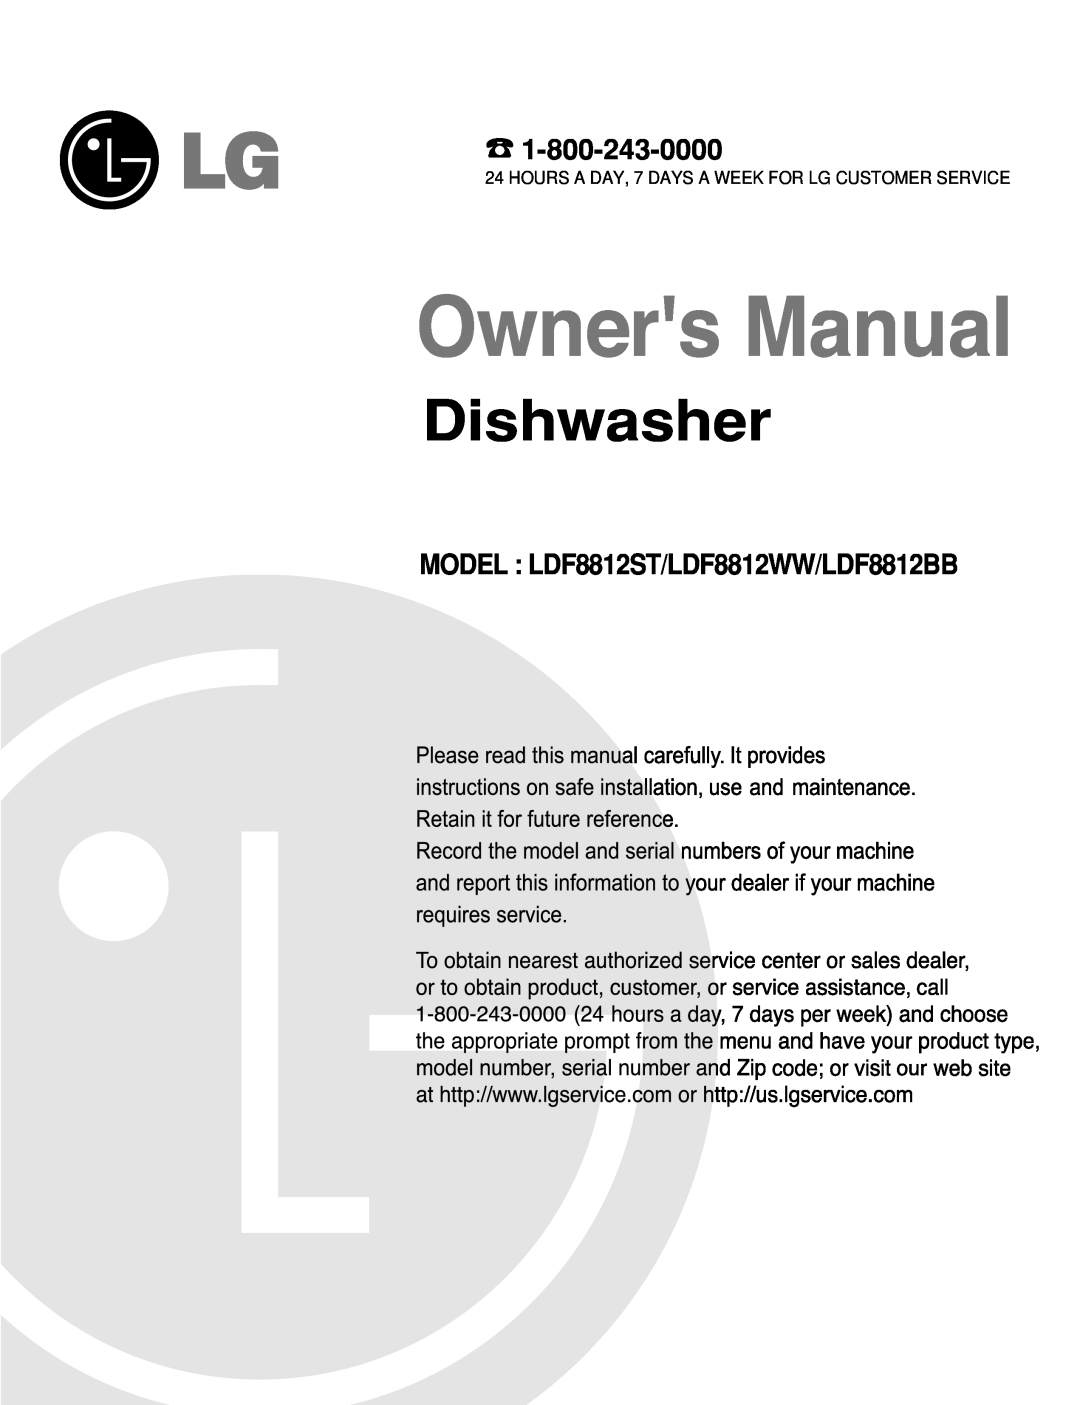 LG Electronics manual MODEL LDF8812ST/LDF8812WW/LDF8812BB, Dishwasher 